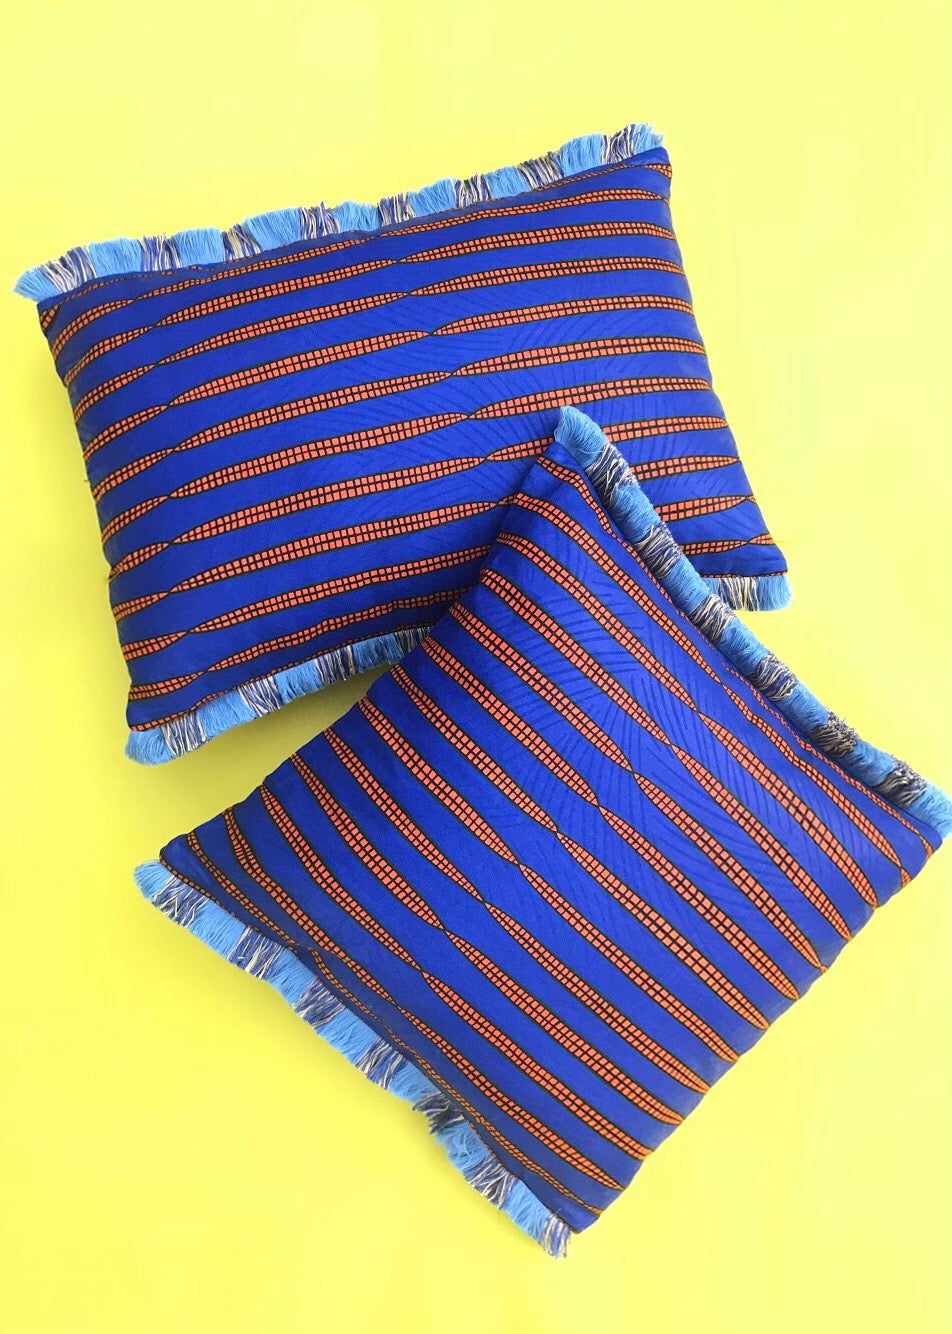 Blue and Orange Ankara Cushion Cover